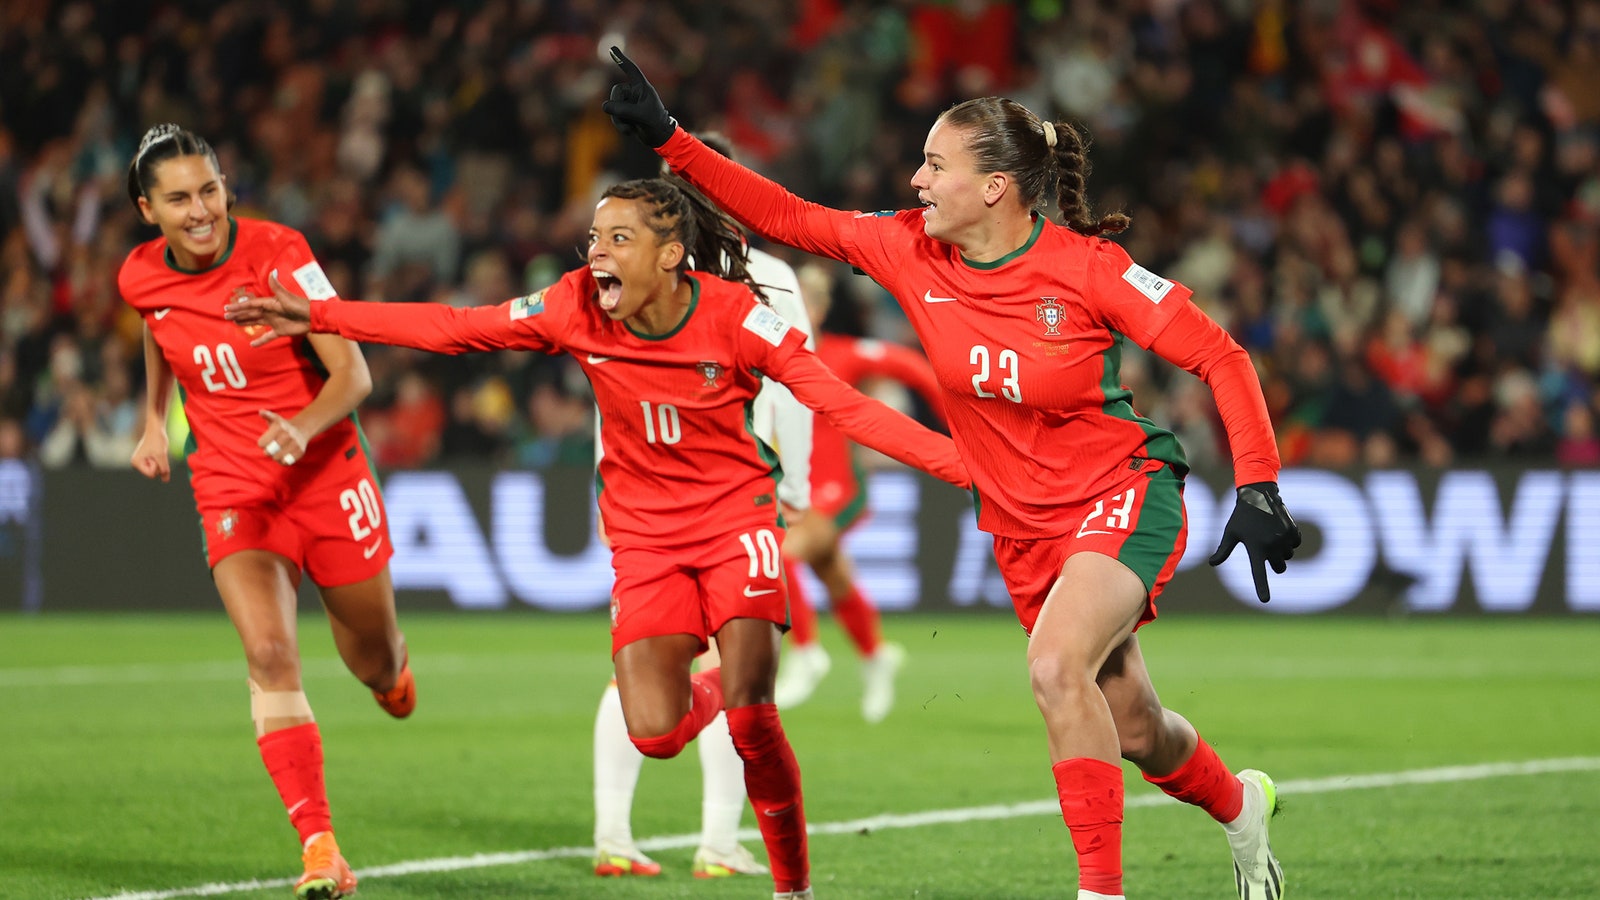 Portugal's Telma Encarnacao opens scoring against Vietnam